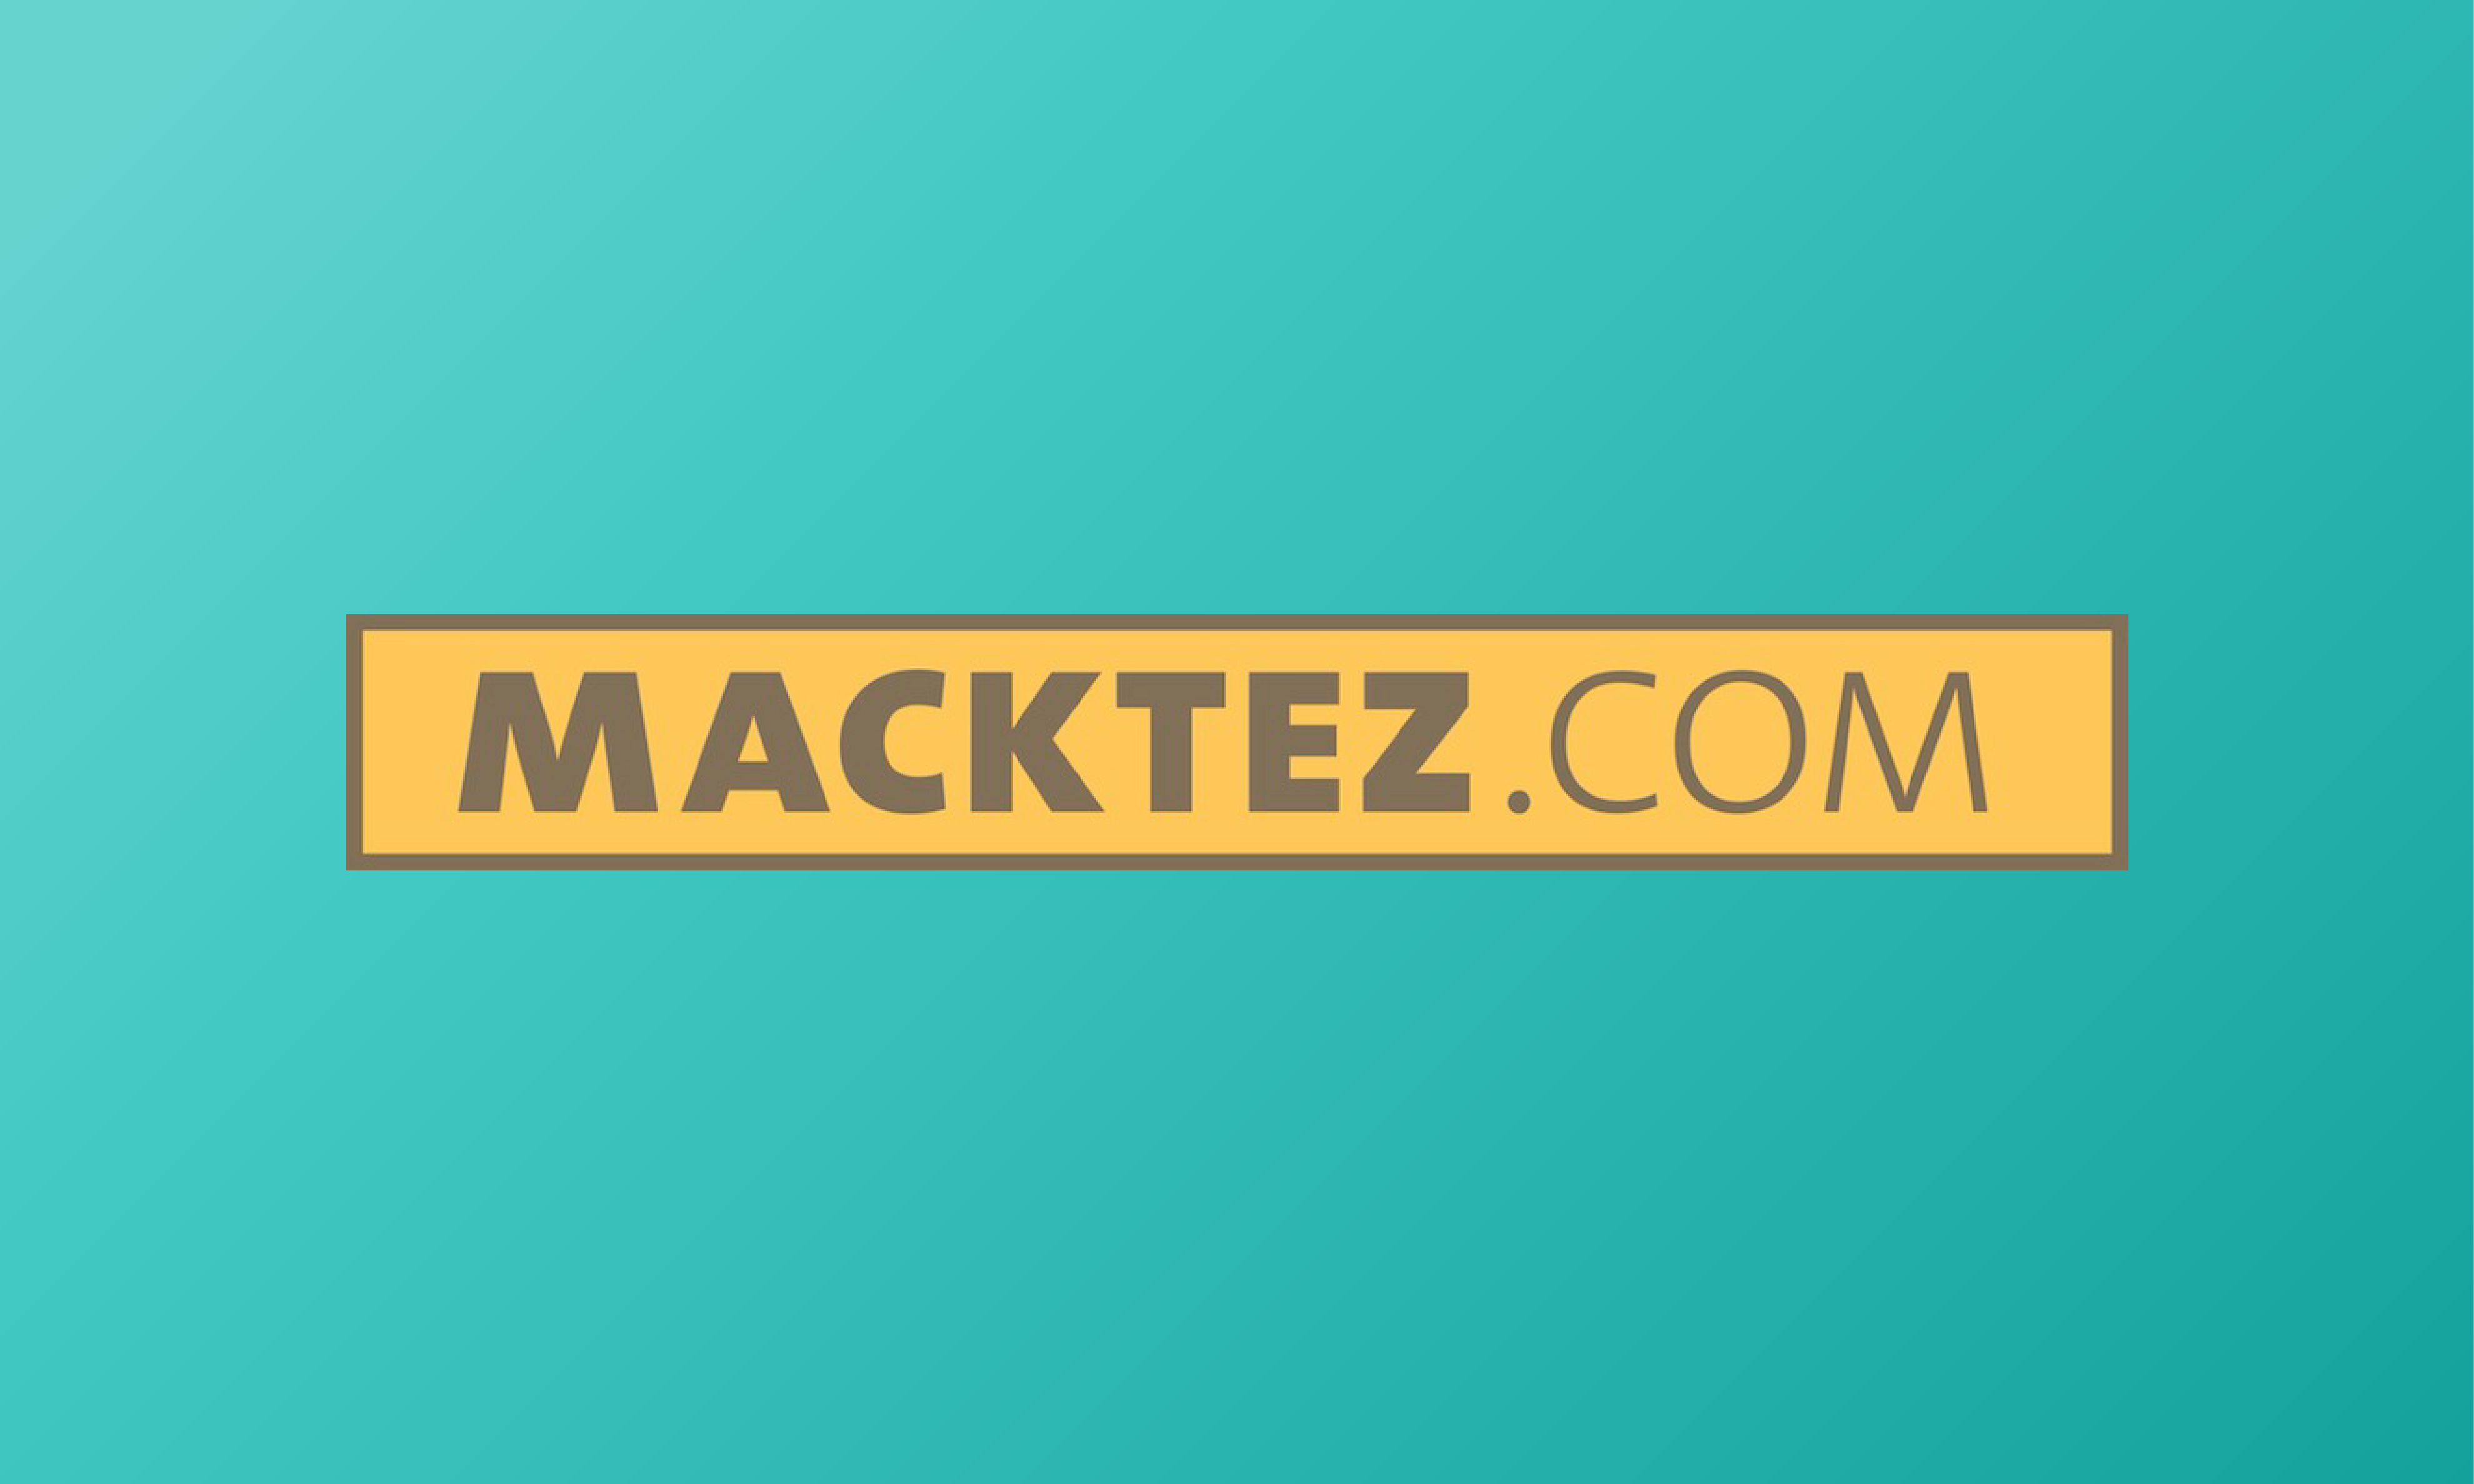 MackTez.com